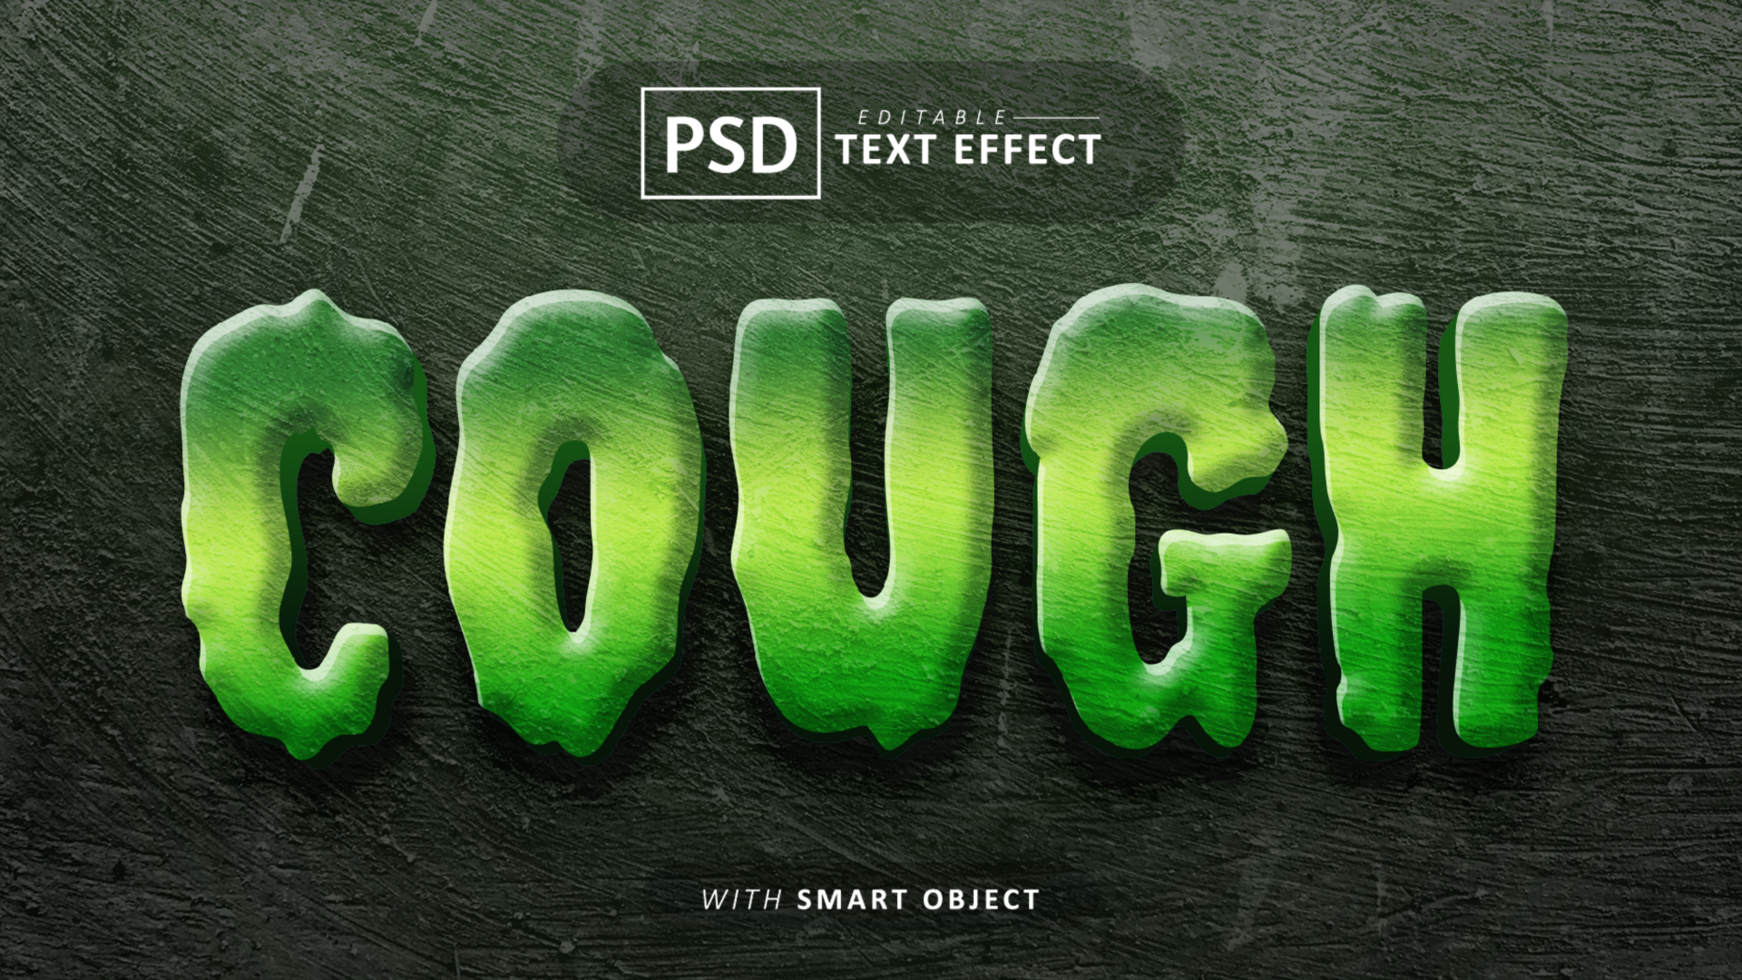 Cough 3d text effect editable psd